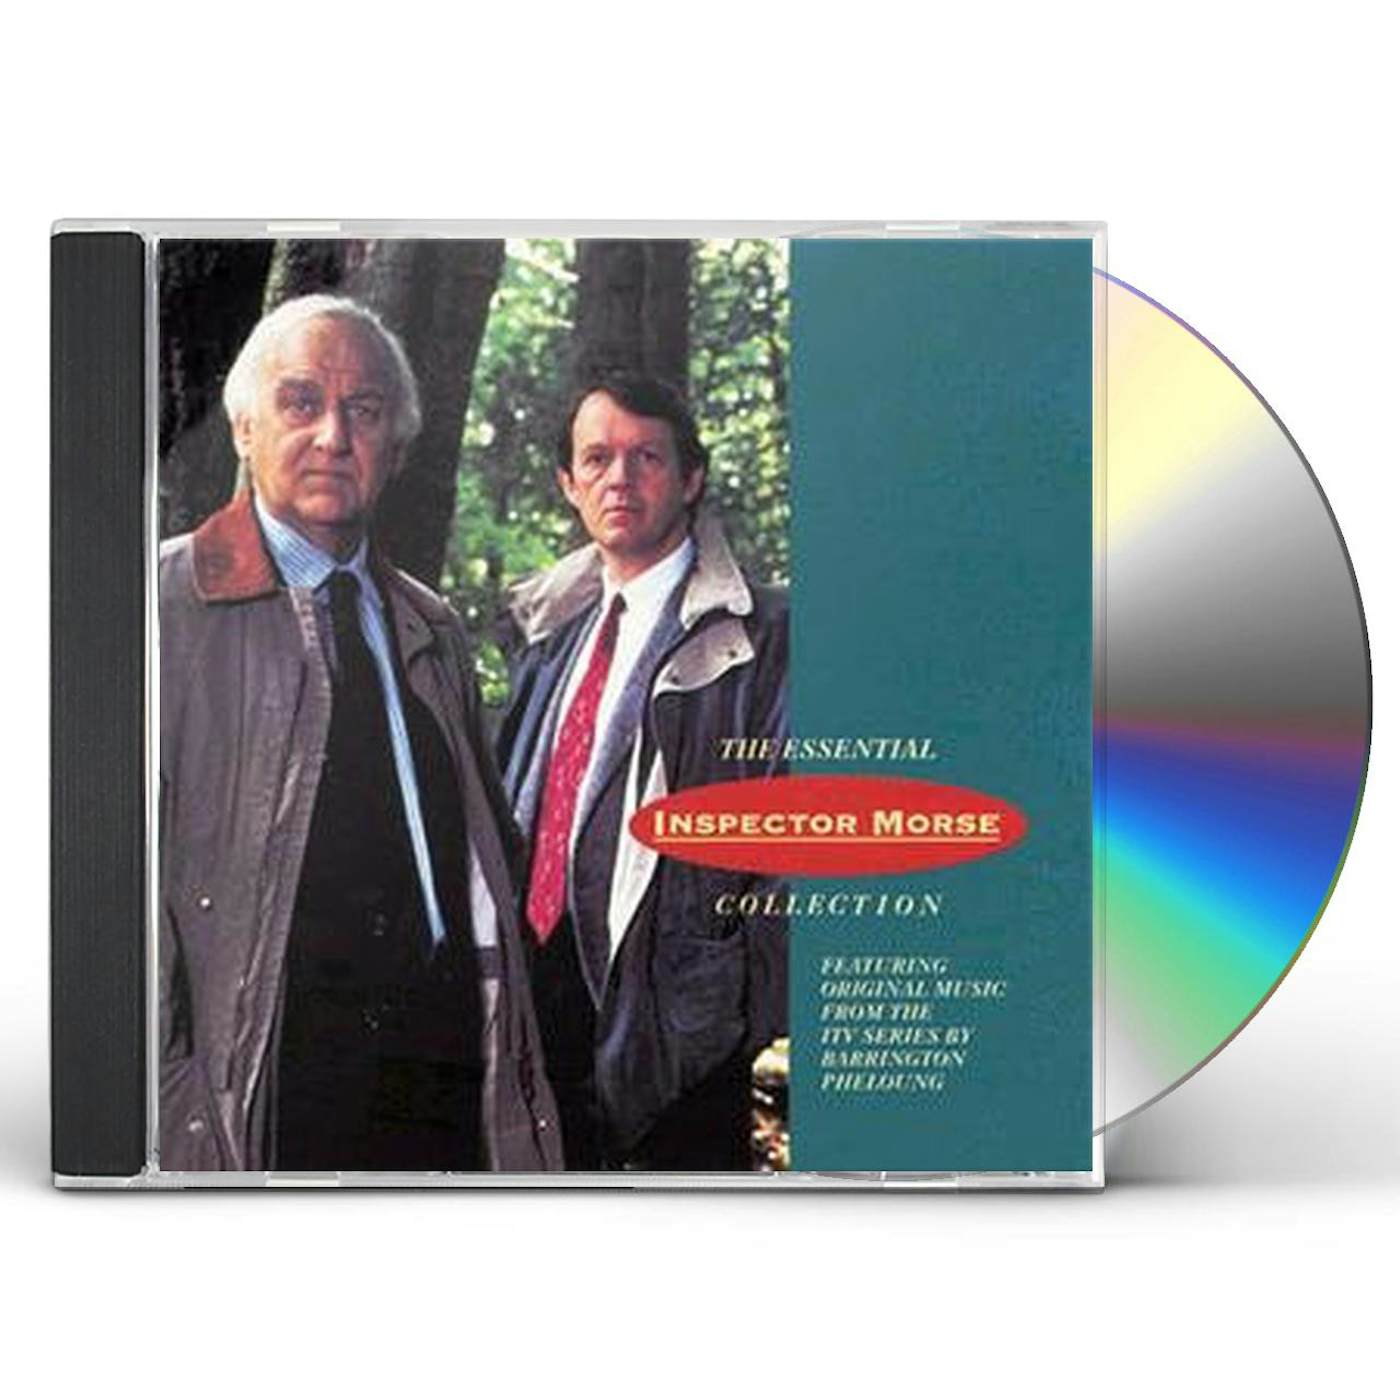 Barrington Pheloung ESSENTIAL INSPECTOR MORSE CD